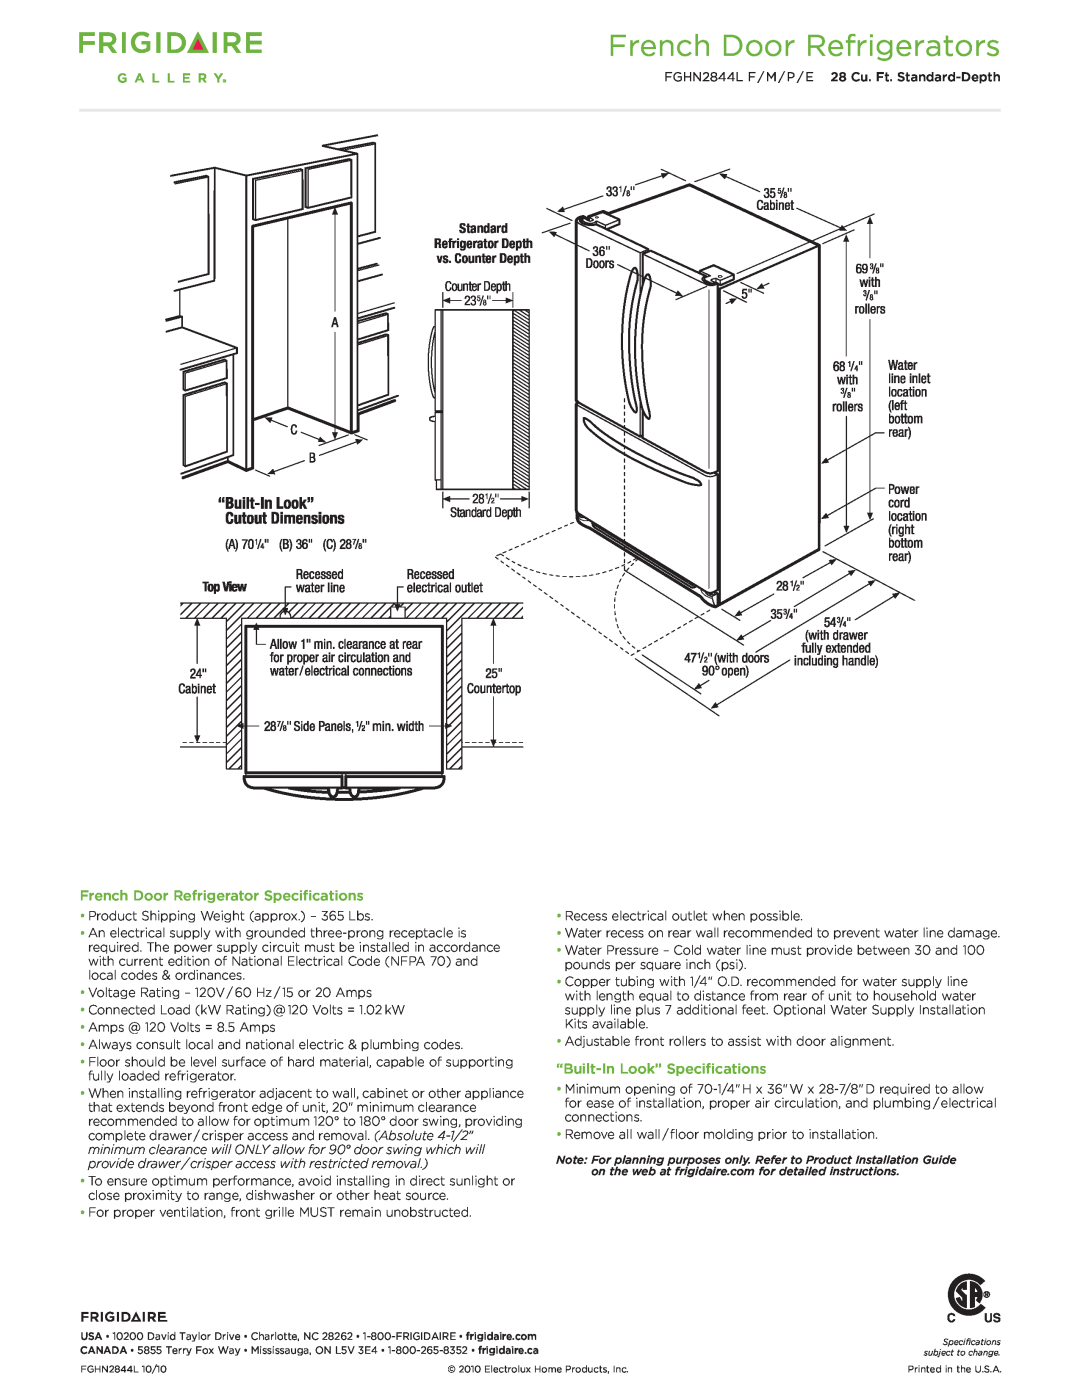 Frigidaire FGHN2844M French Door Refrigerator Specifications, “Built-In Look” Specifications, French Door Refrigerators 